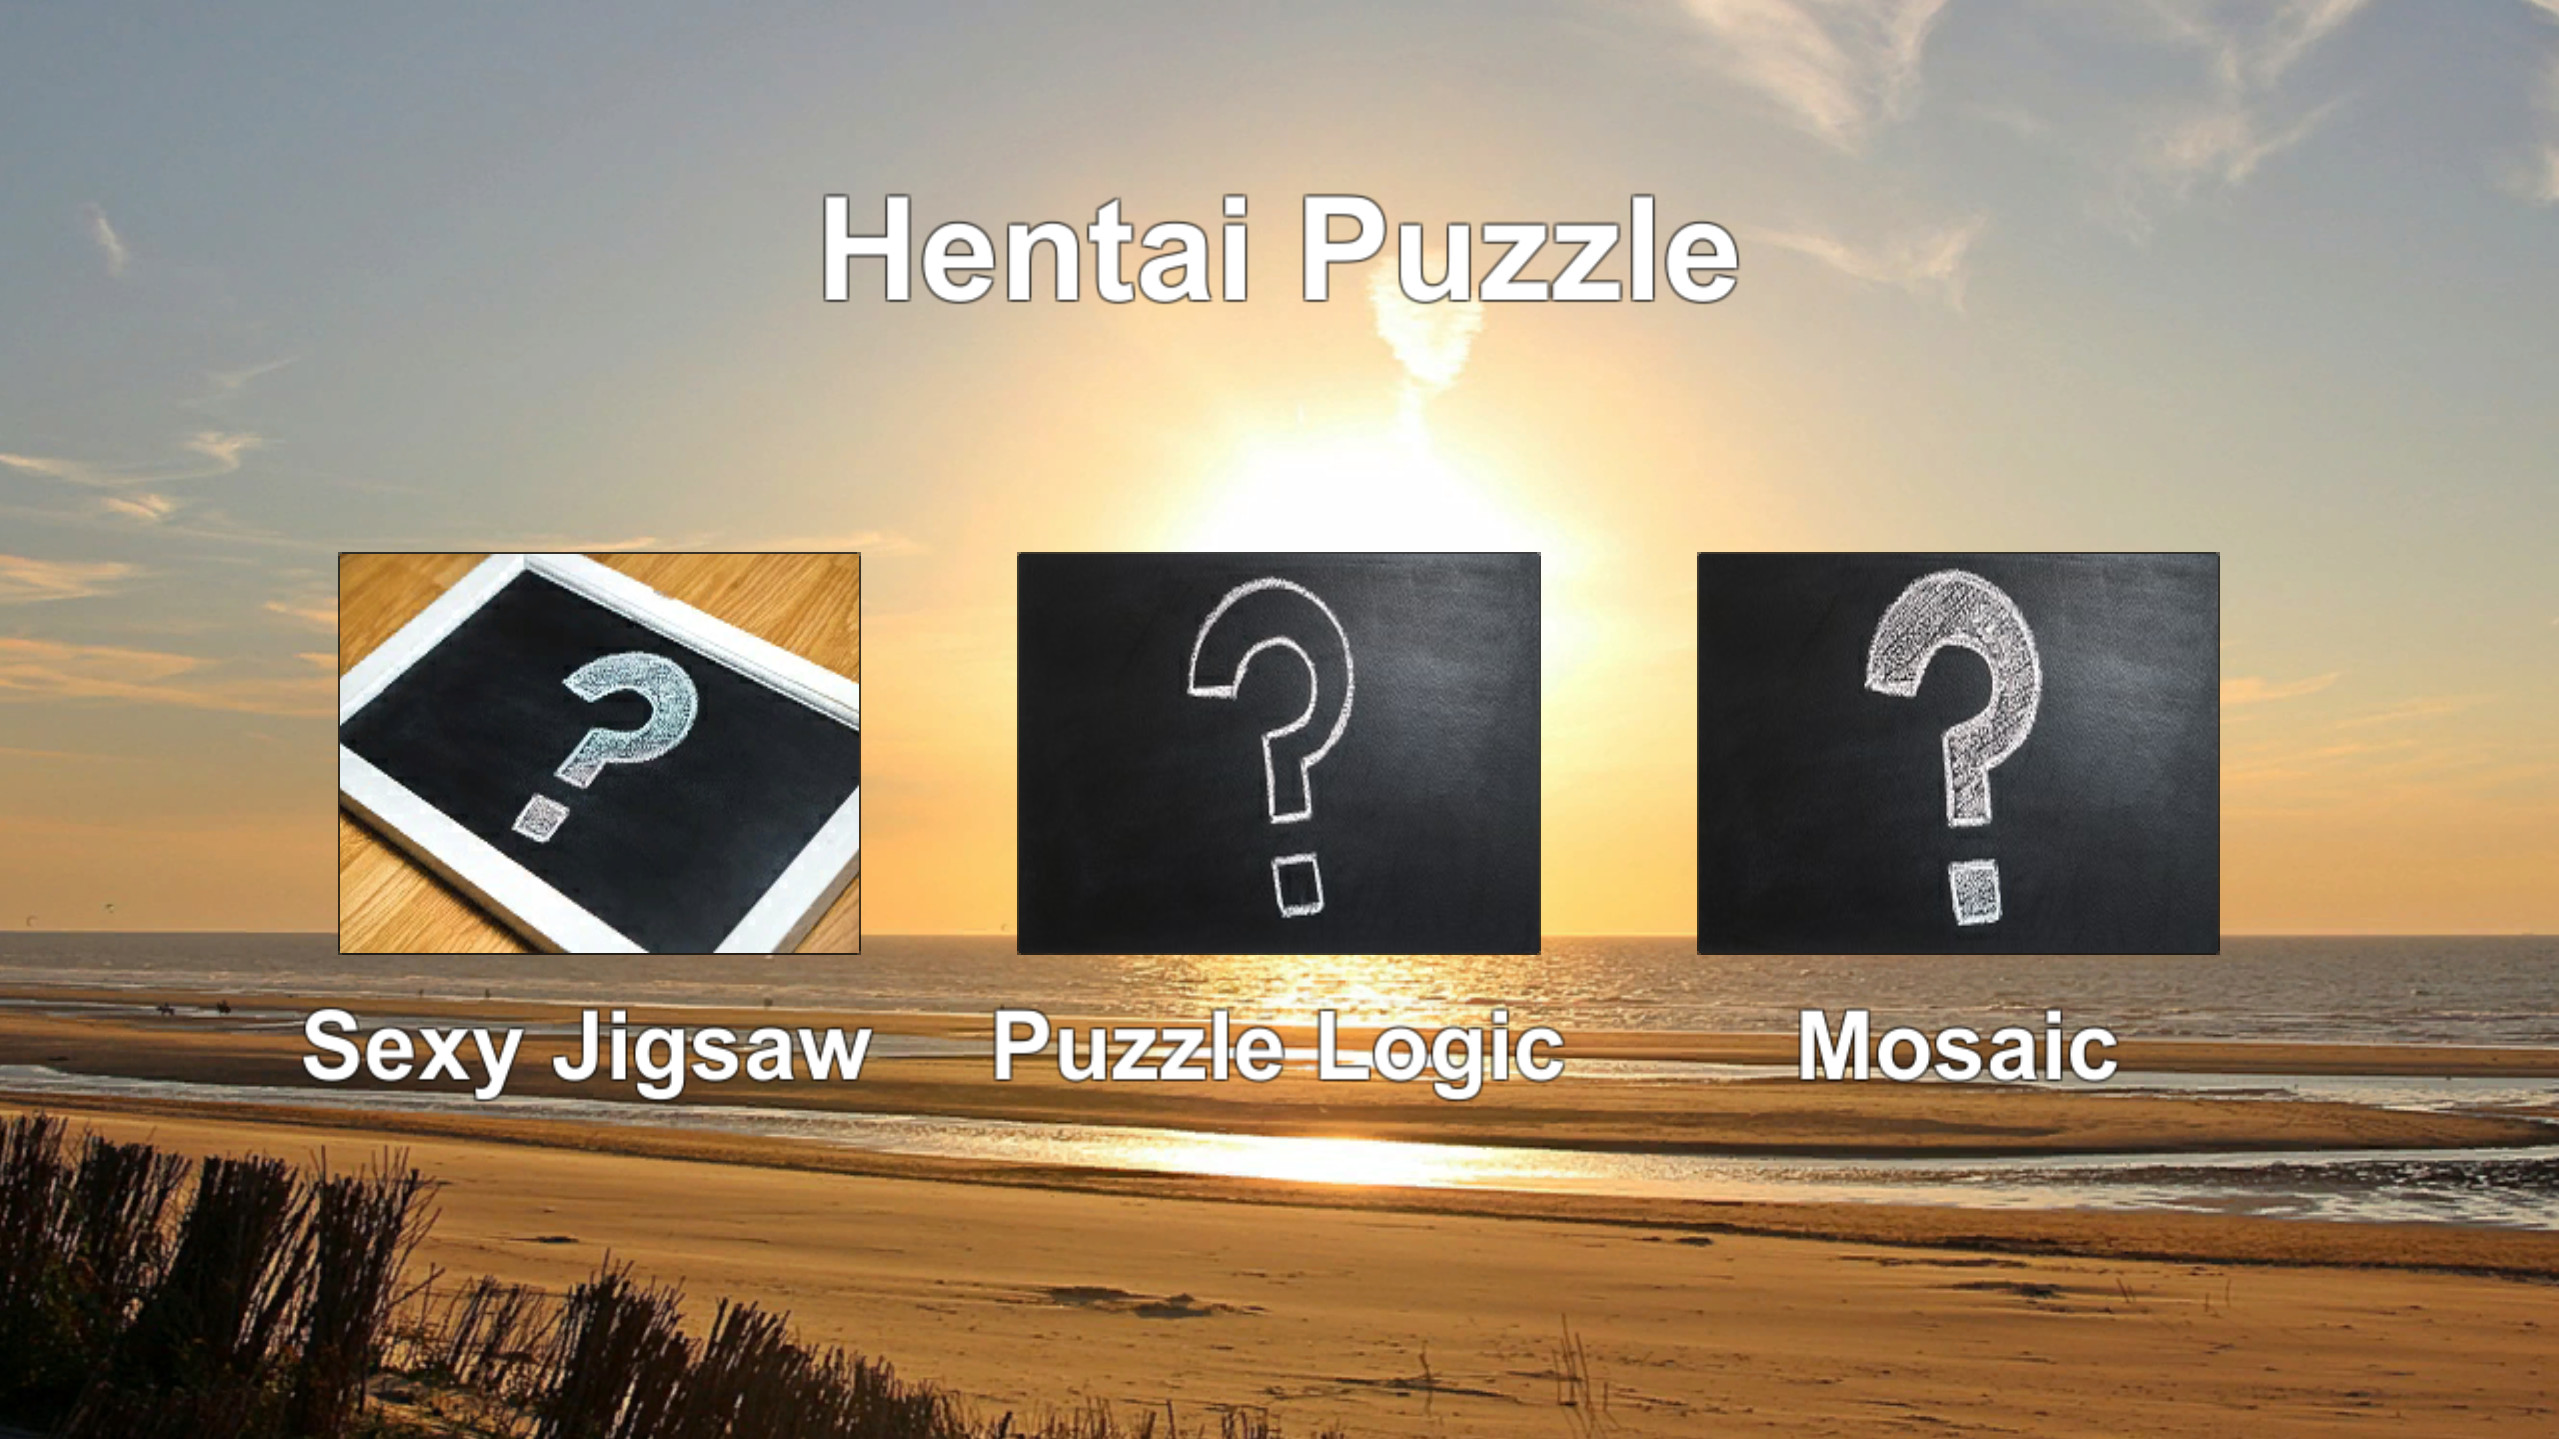 Hentai puzzle ? Not again.... Steam CD Key 0.27 $